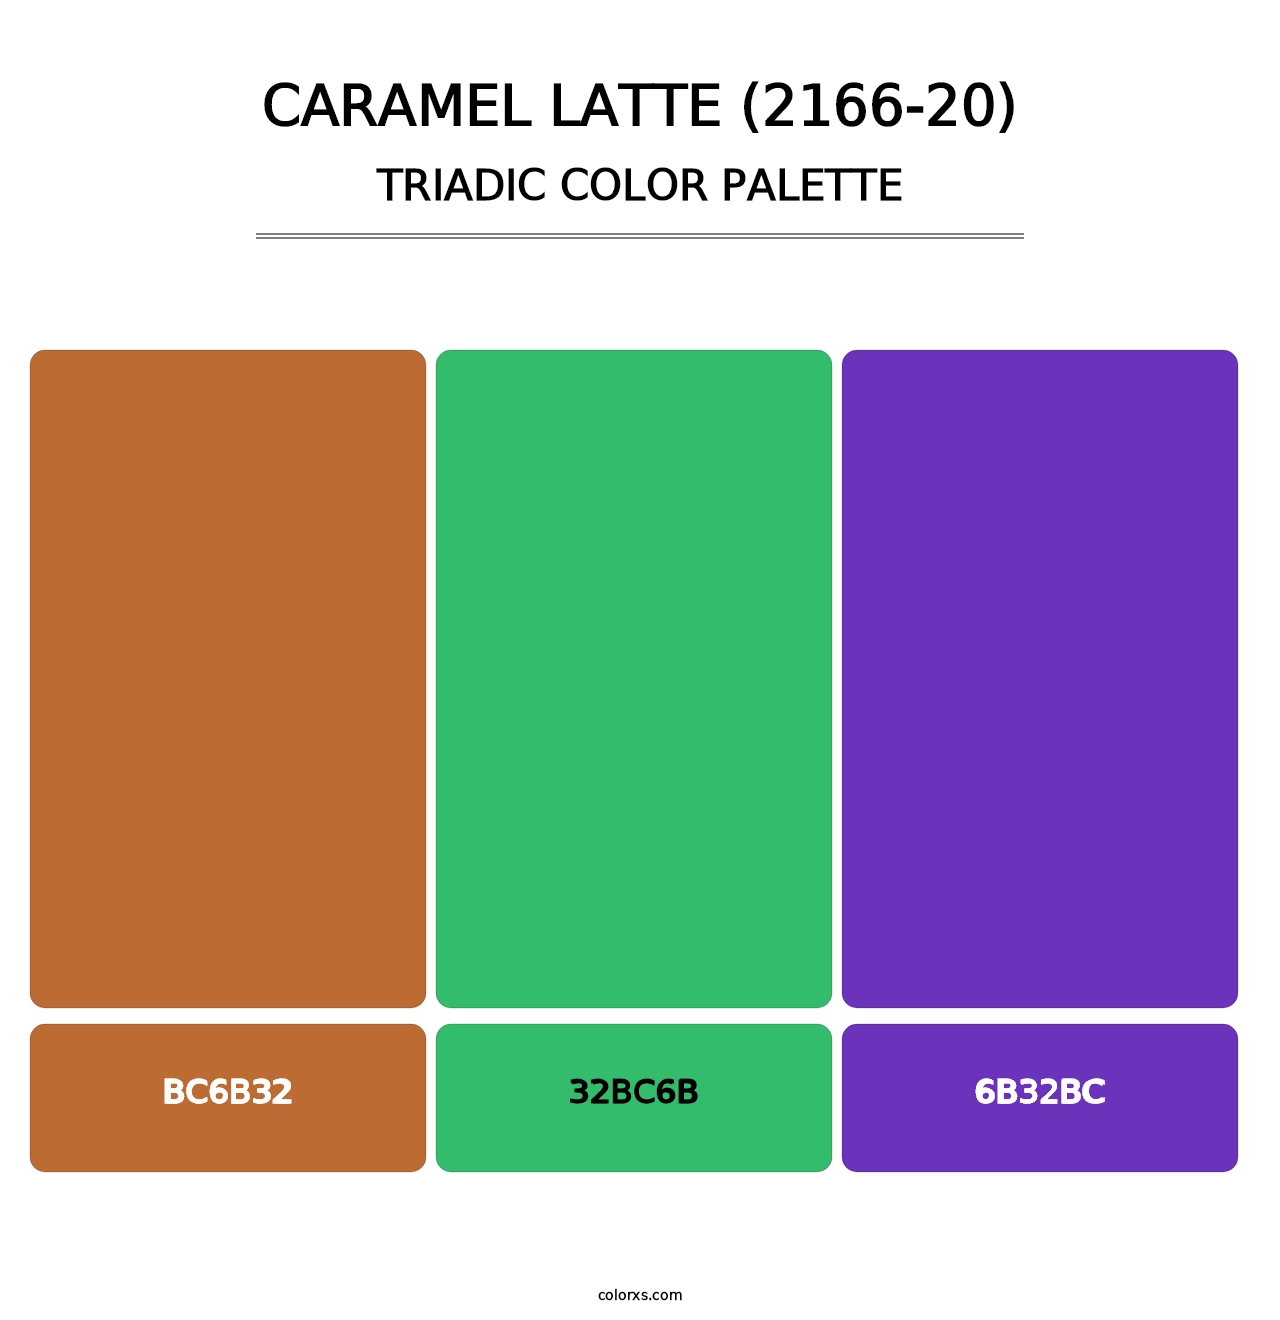 Caramel Latte (2166-20) - Triadic Color Palette